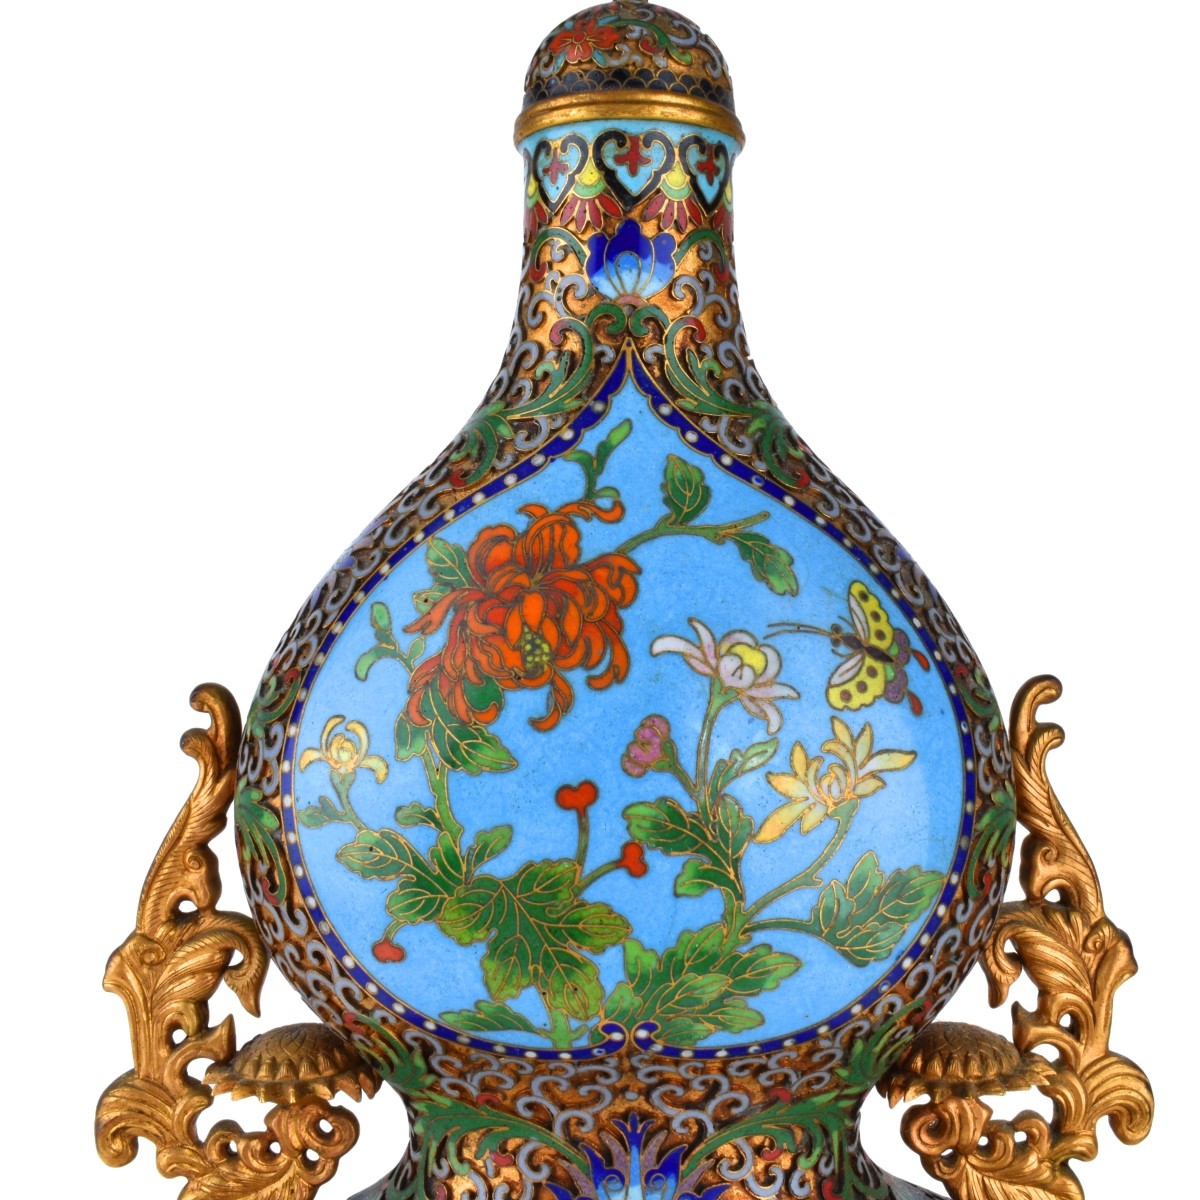 Pair of Chinese Republic Era Double Gourd Vases